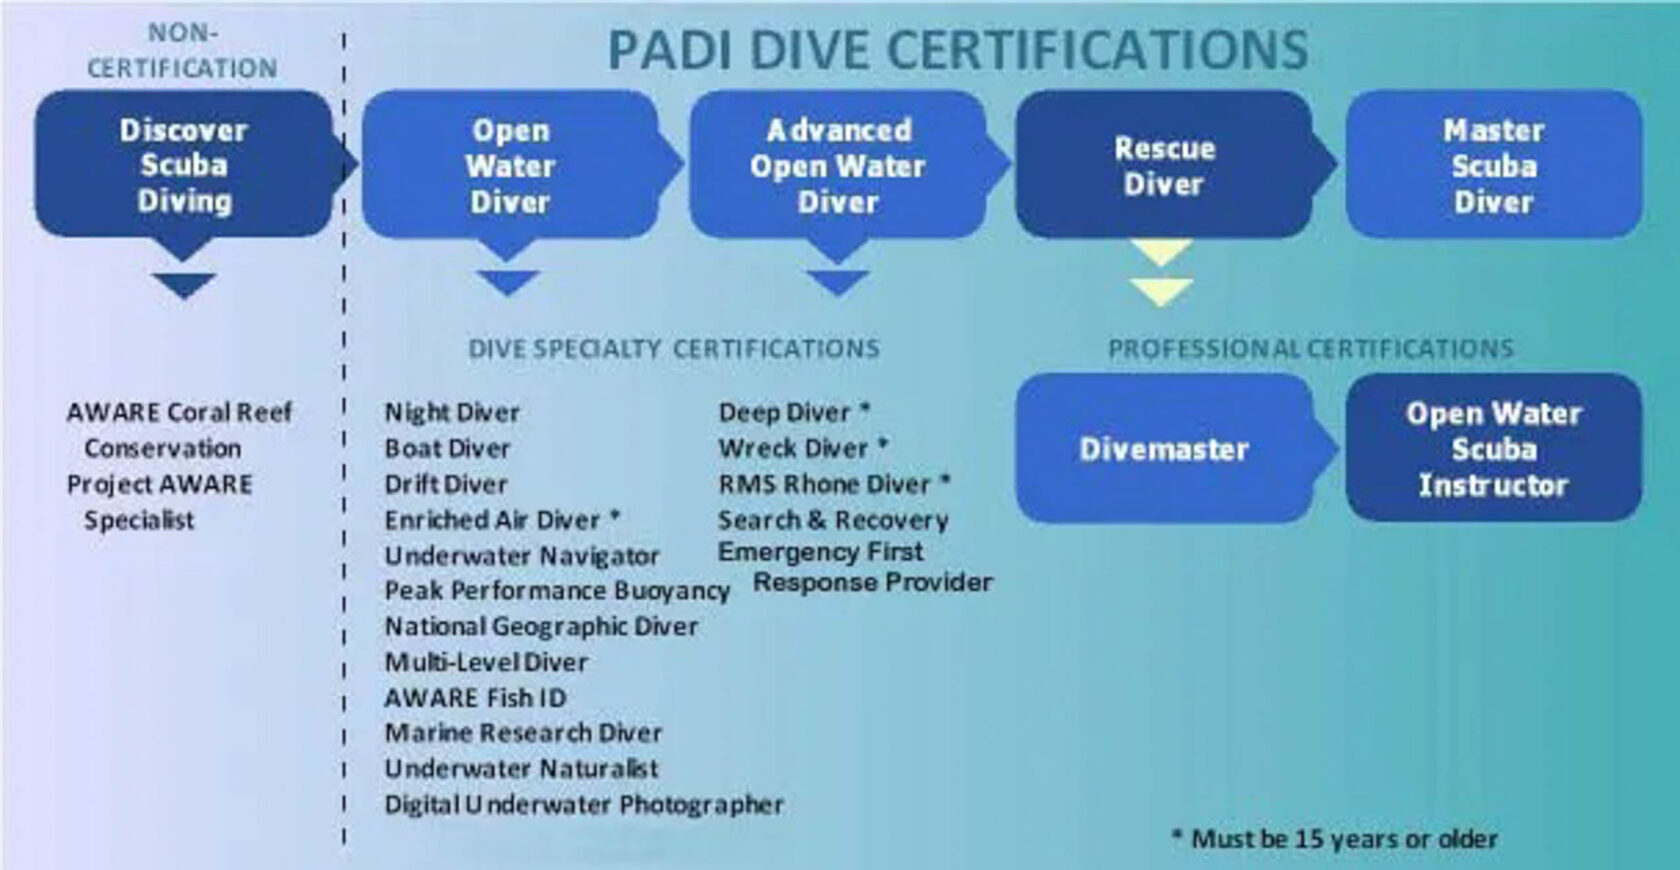 PADI Dive Certifications graphic.